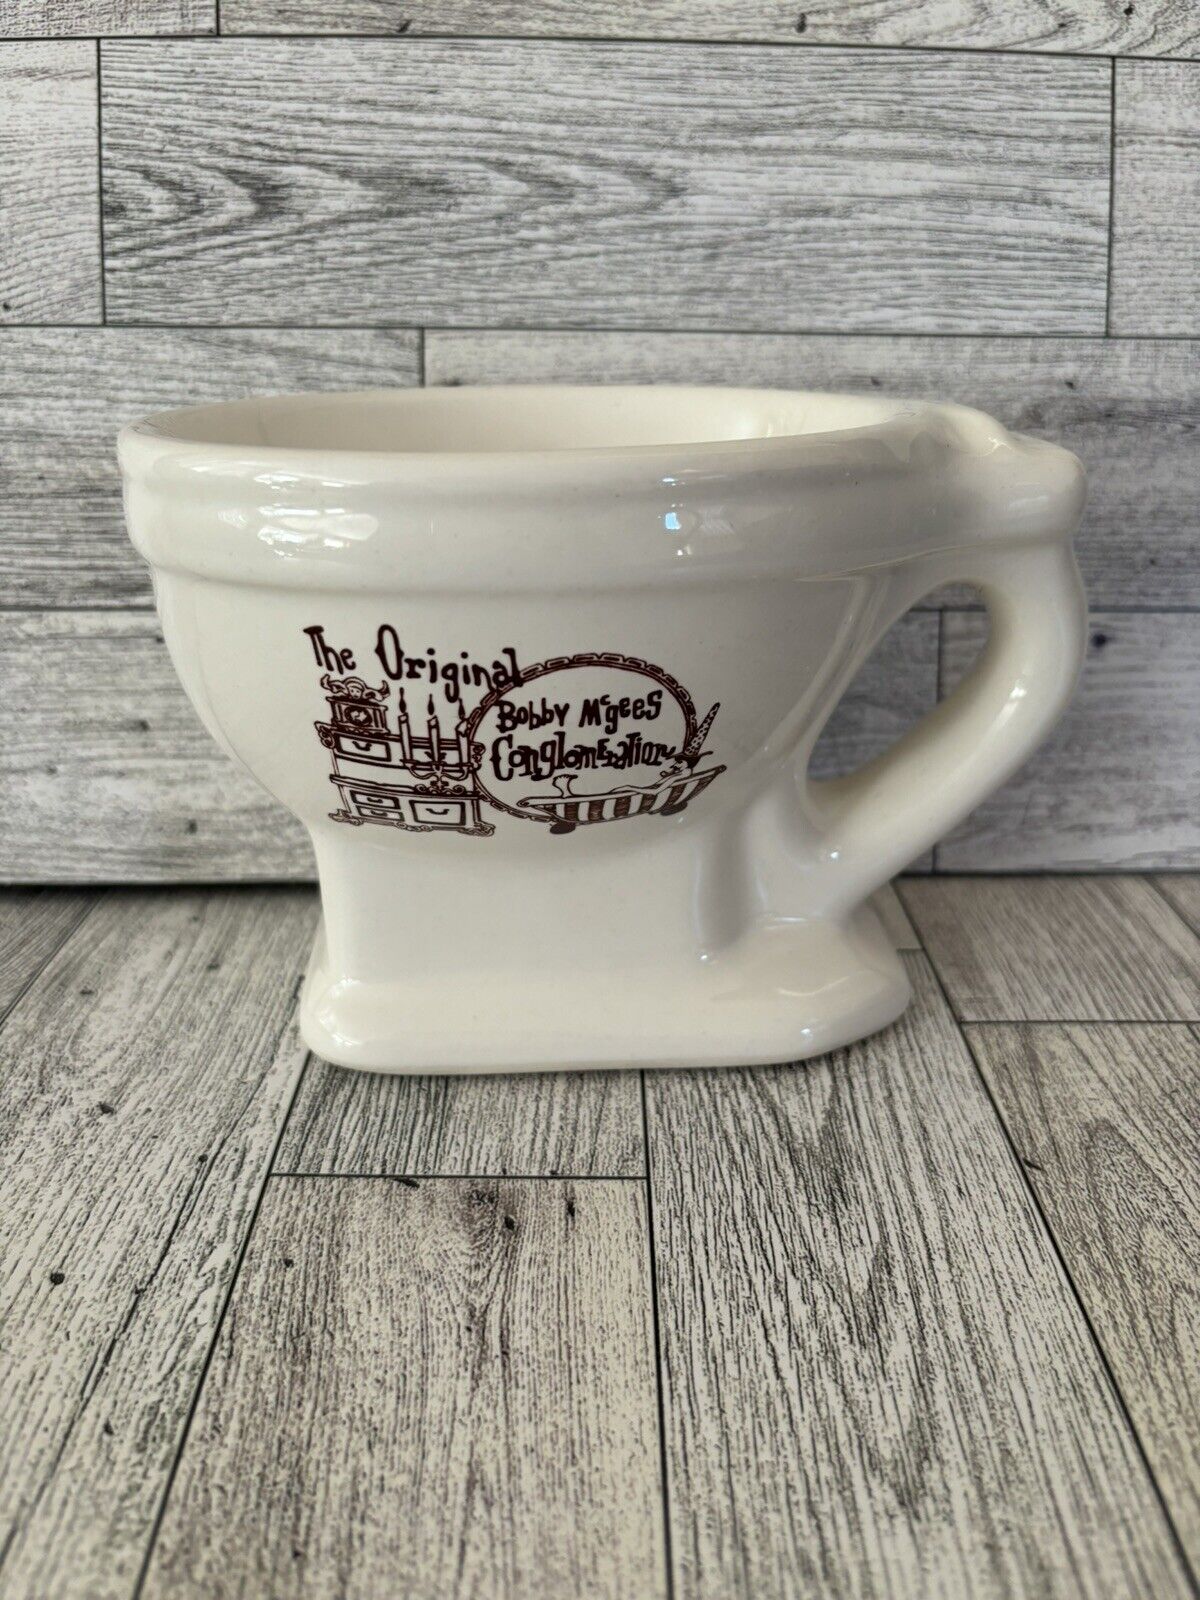 The Original Bobby McGees Conglomeration-Toilet Bowl Shaped Coffee Mug